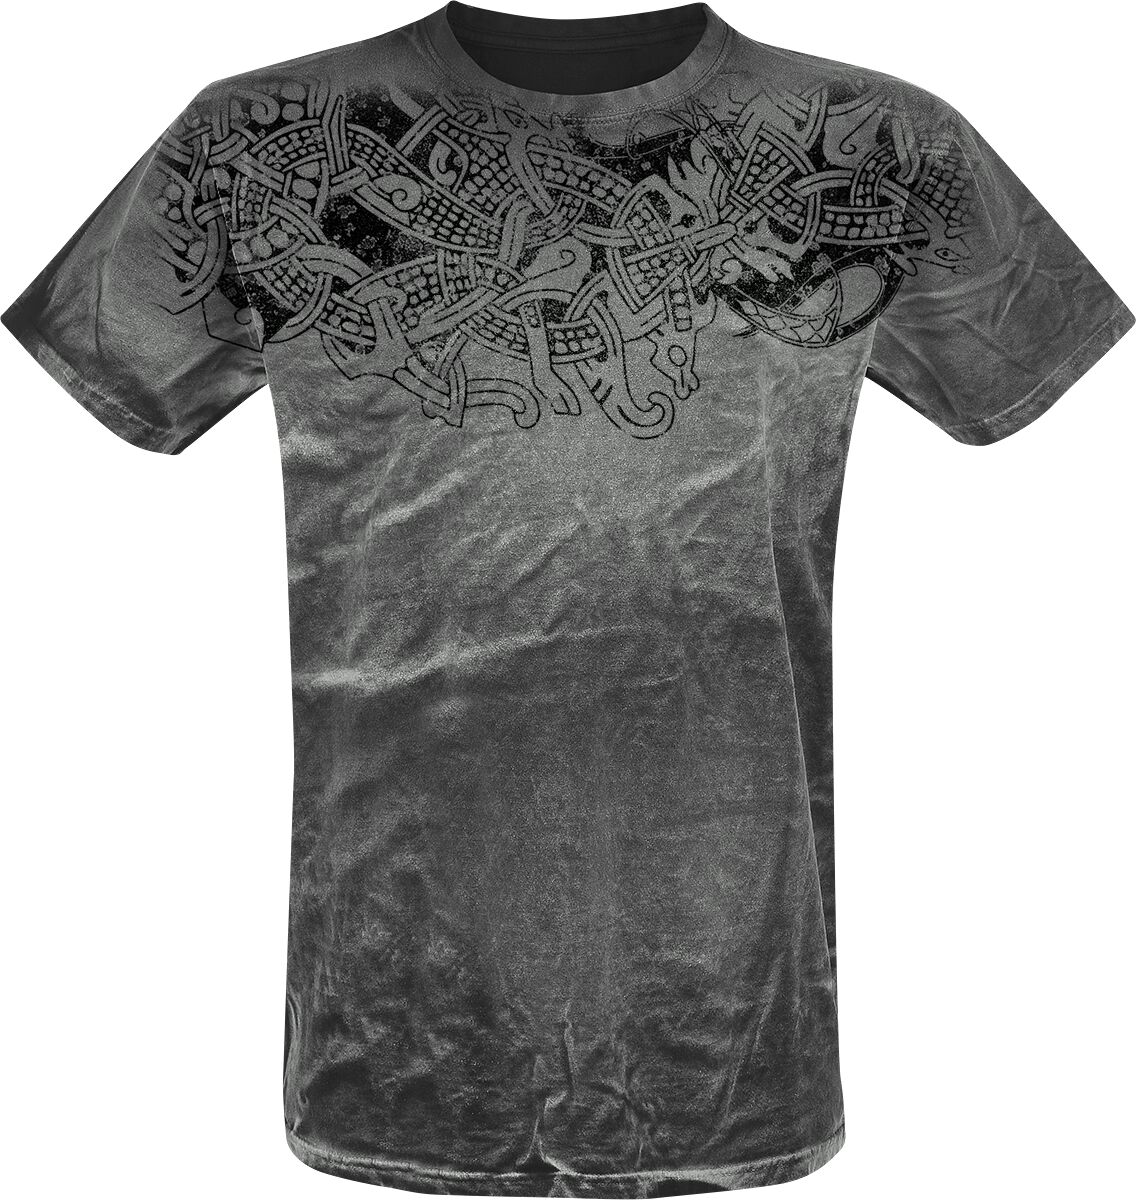 Outer Vision T-Shirt - Thunderstorm - S bis 3XL - für Männer - Größe L - grau